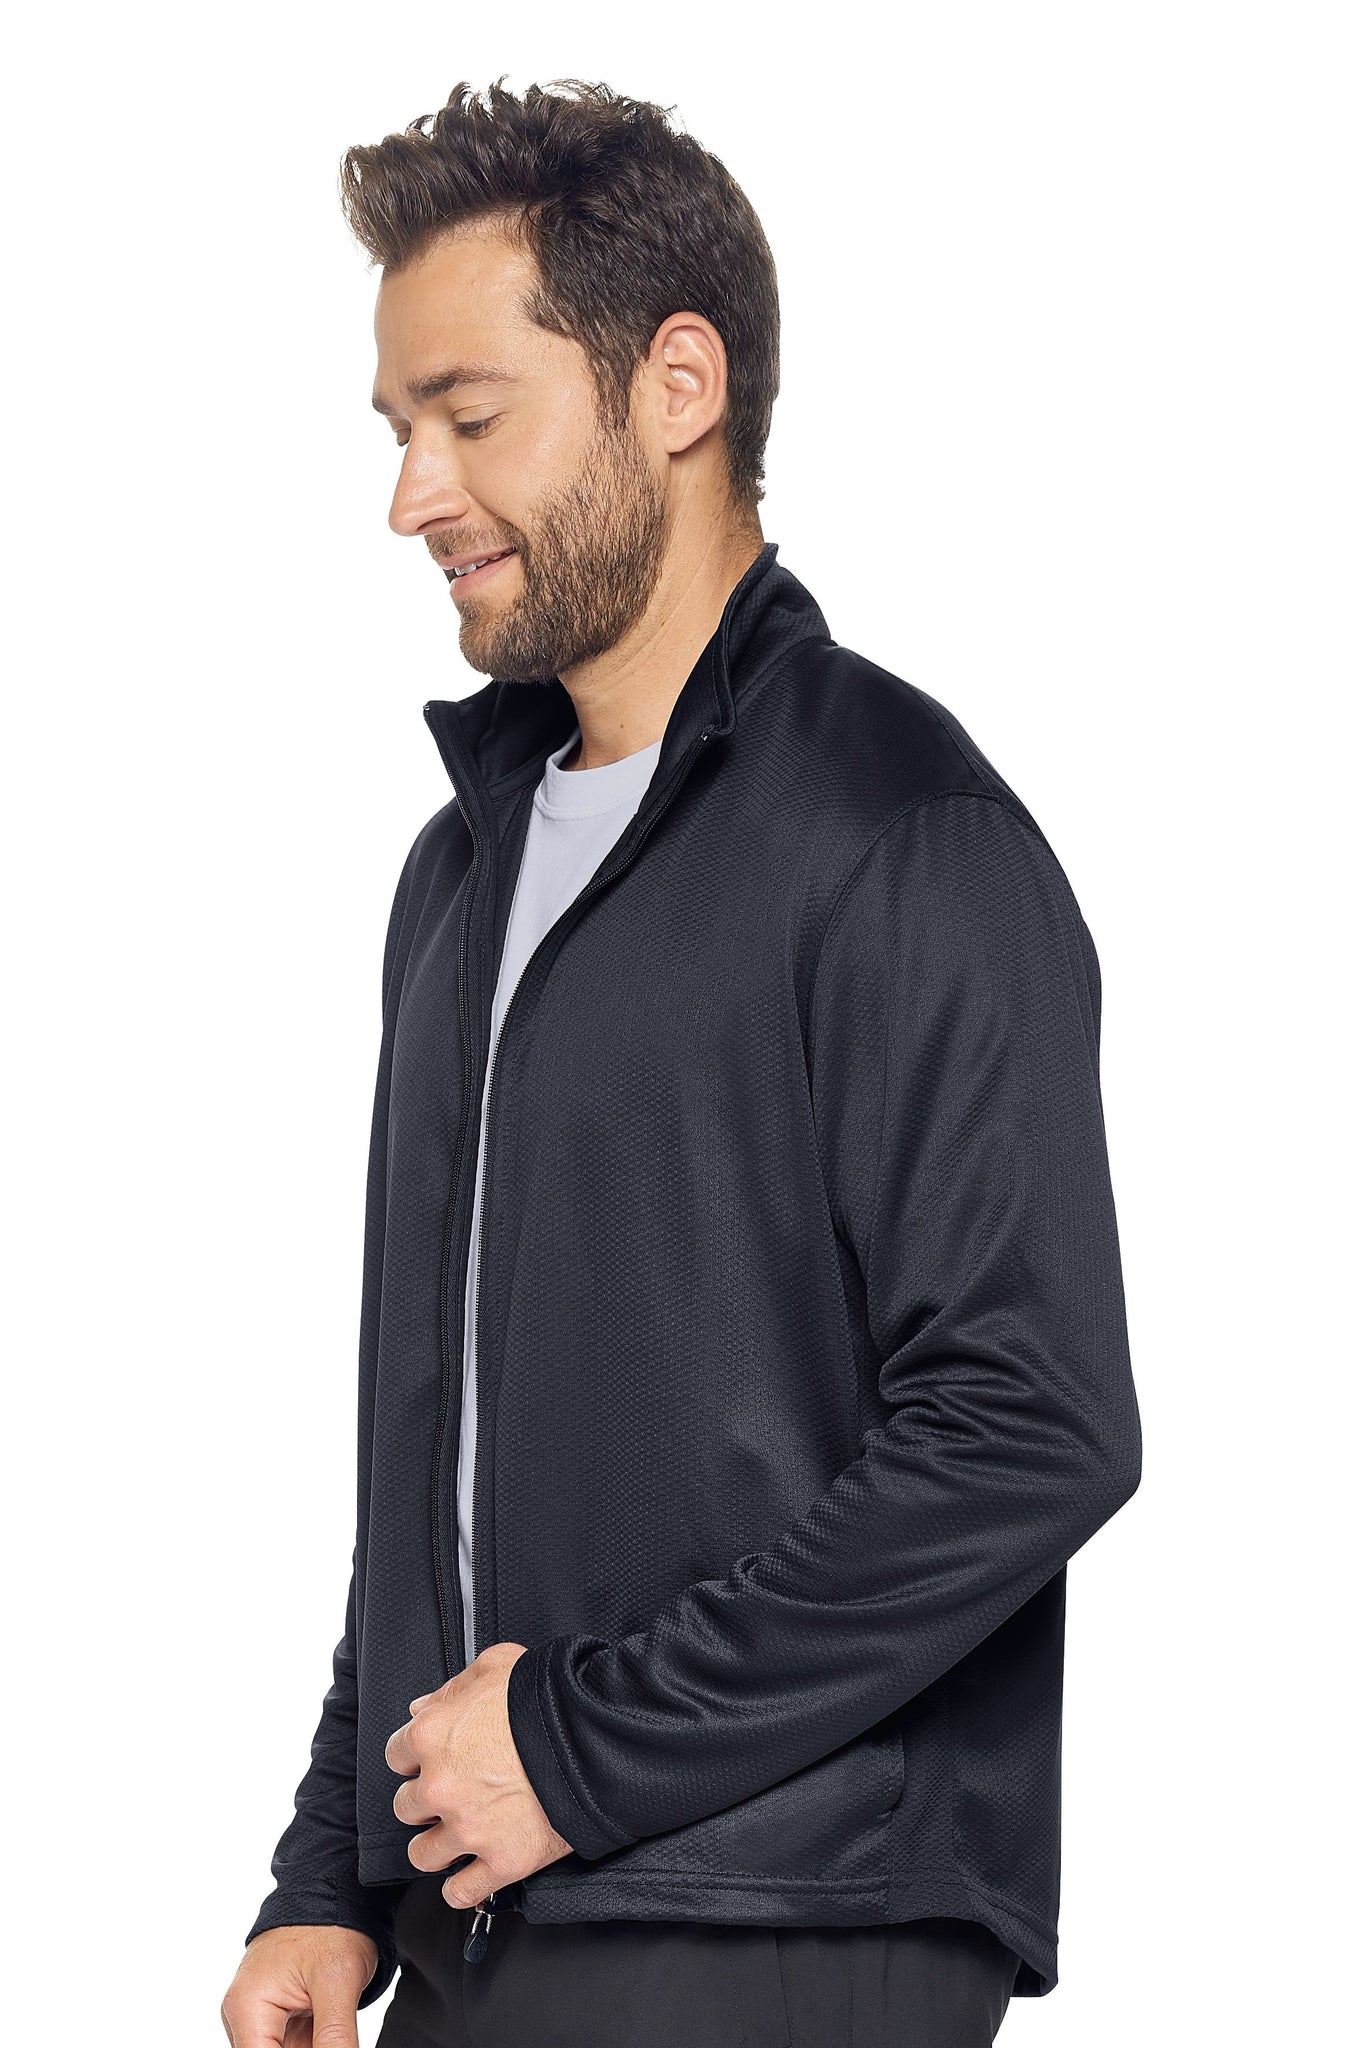 Expert Brand Wholesale Men's Sportsman Jacket in Black Image 2#black